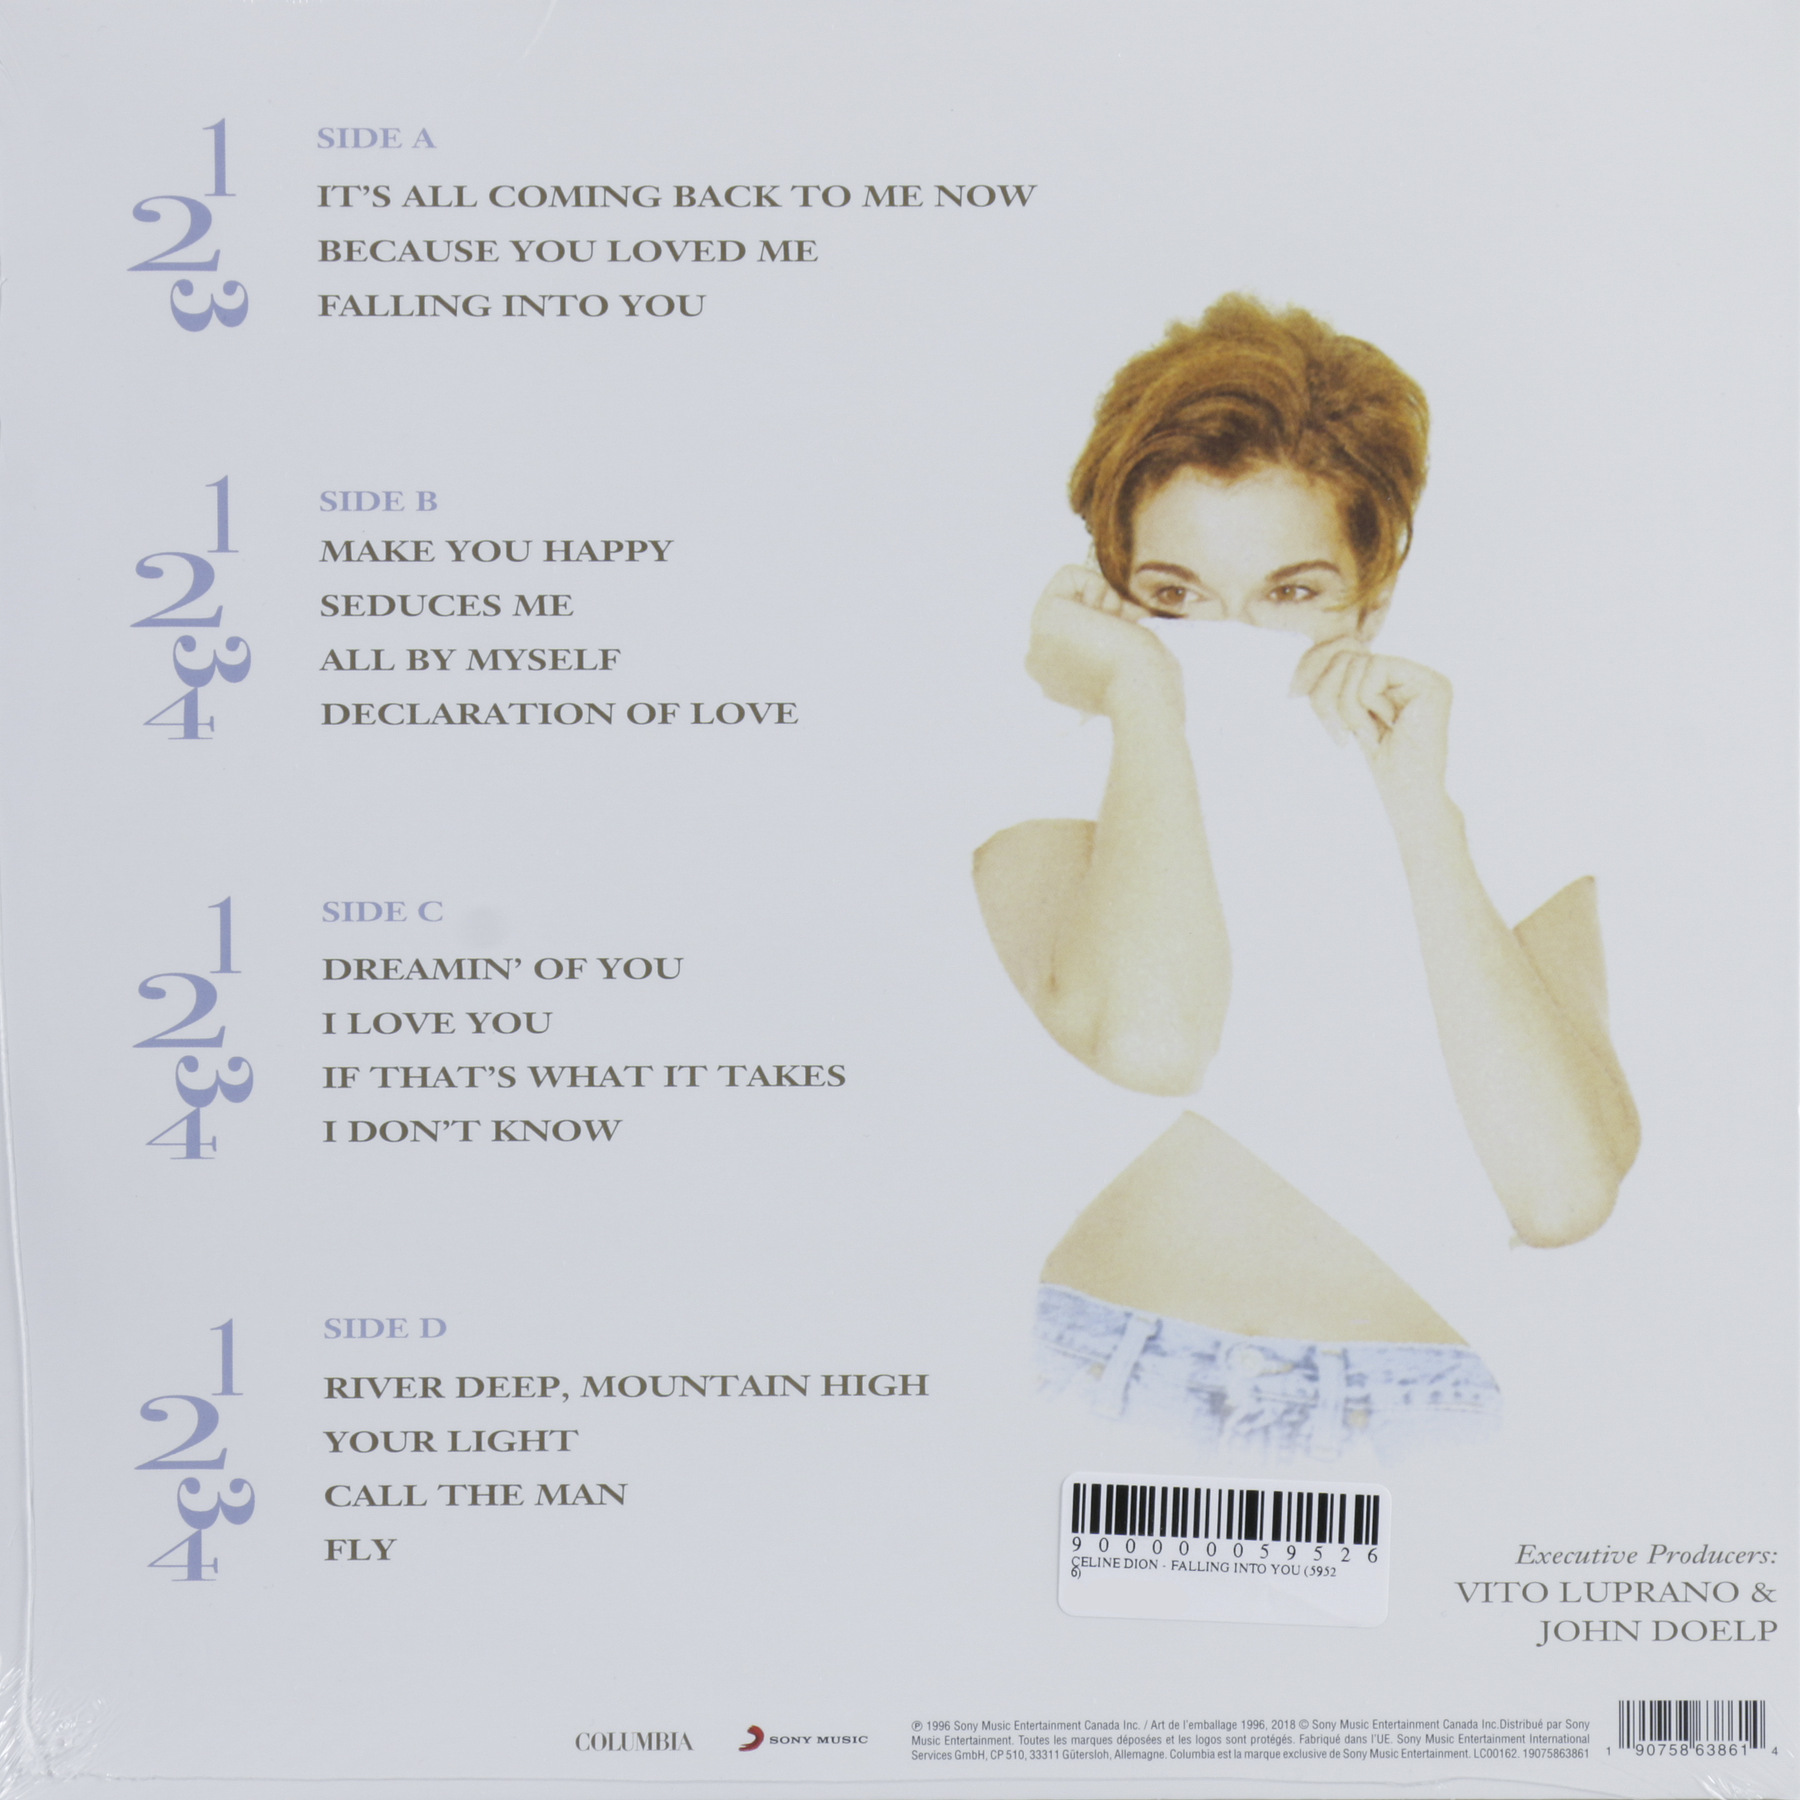 Falling into you Селин Дион. Céline Dion - Falling into you (1996). Селин Дион 1996. Селин Дион альбом Falling into you. All by myself celine